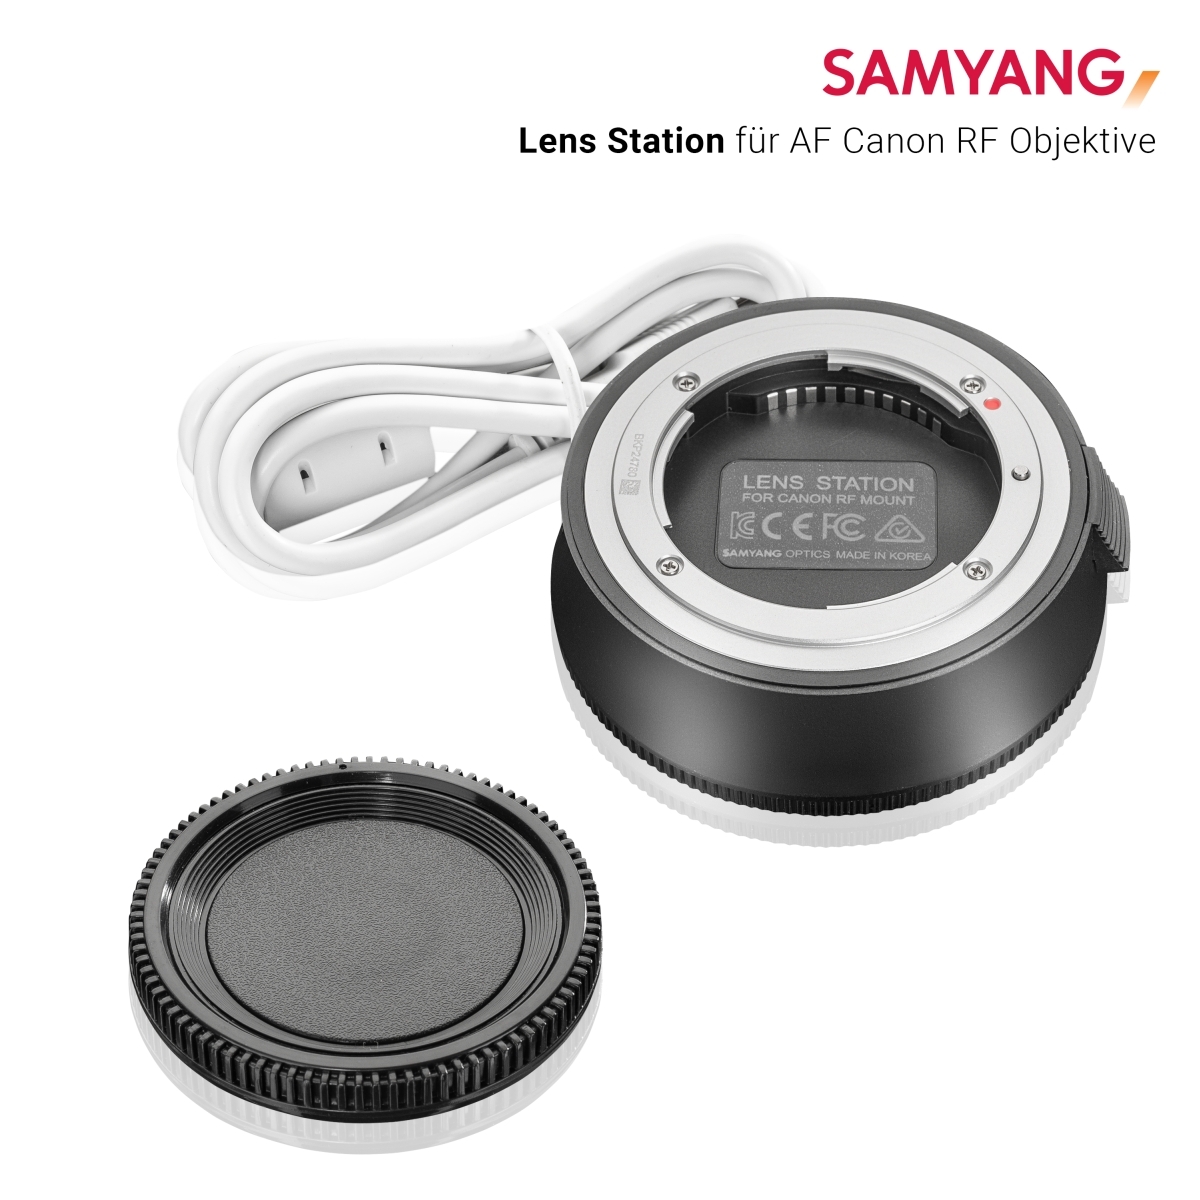 Samyang Lens Station for Canon RF lenses - walimex & walimex pro